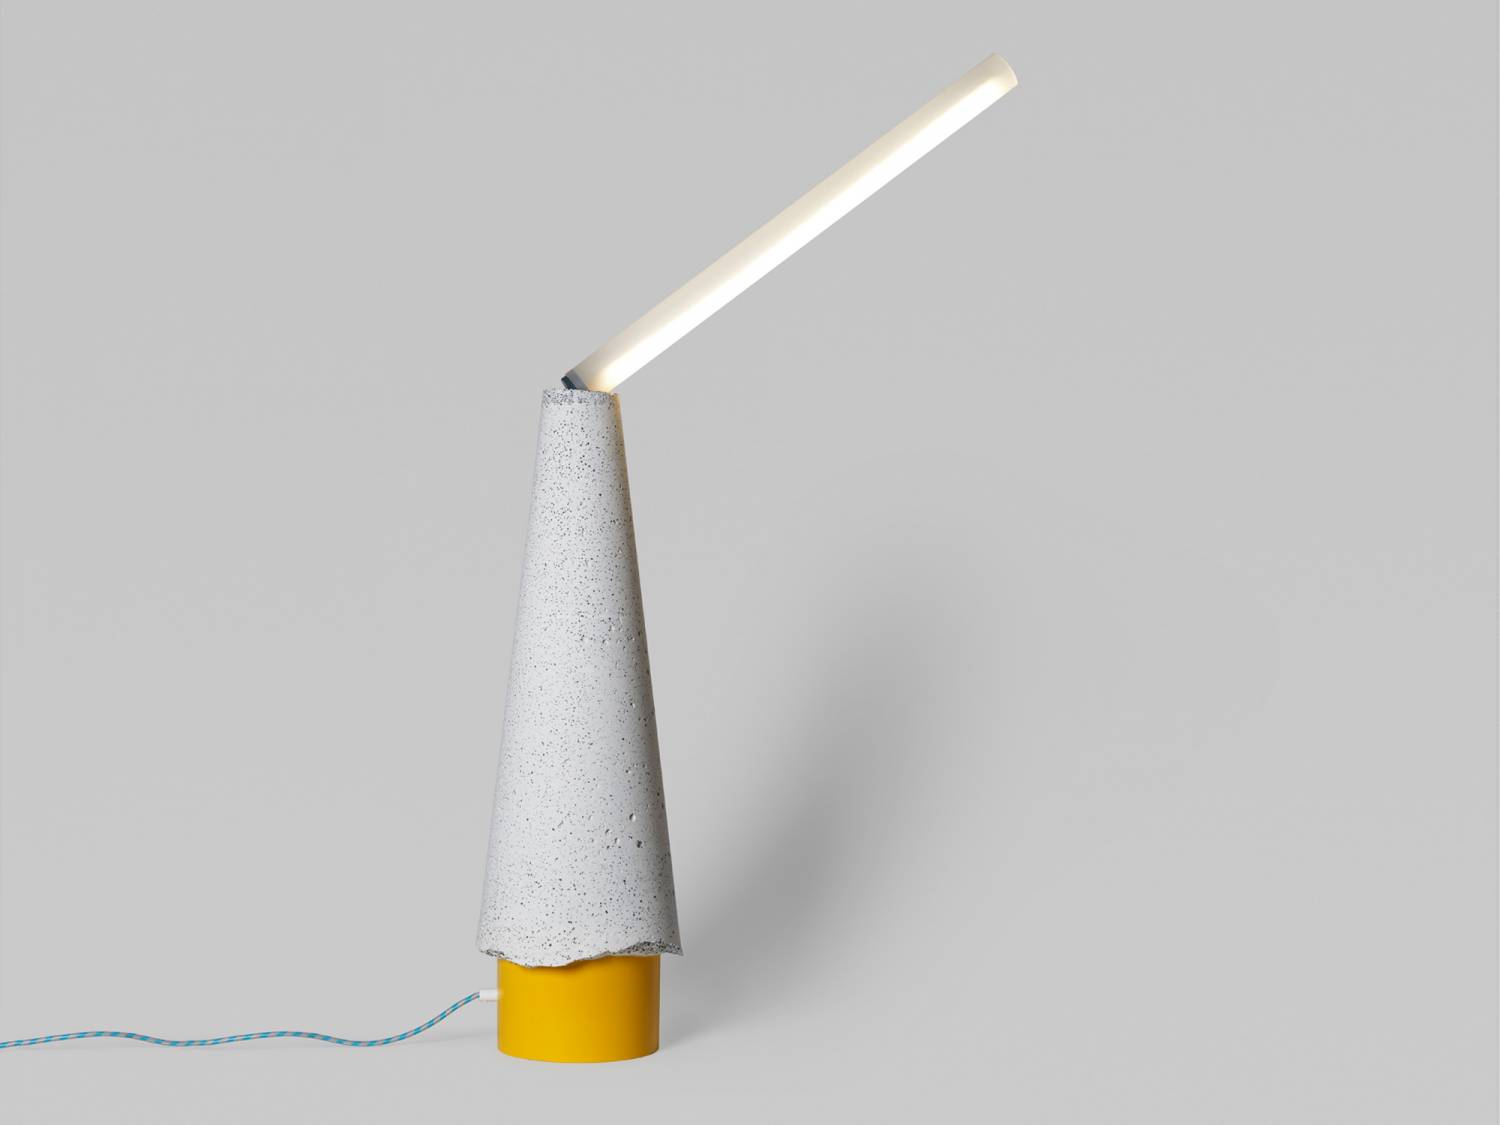 Lamp by David Taylor | Flodeau.com